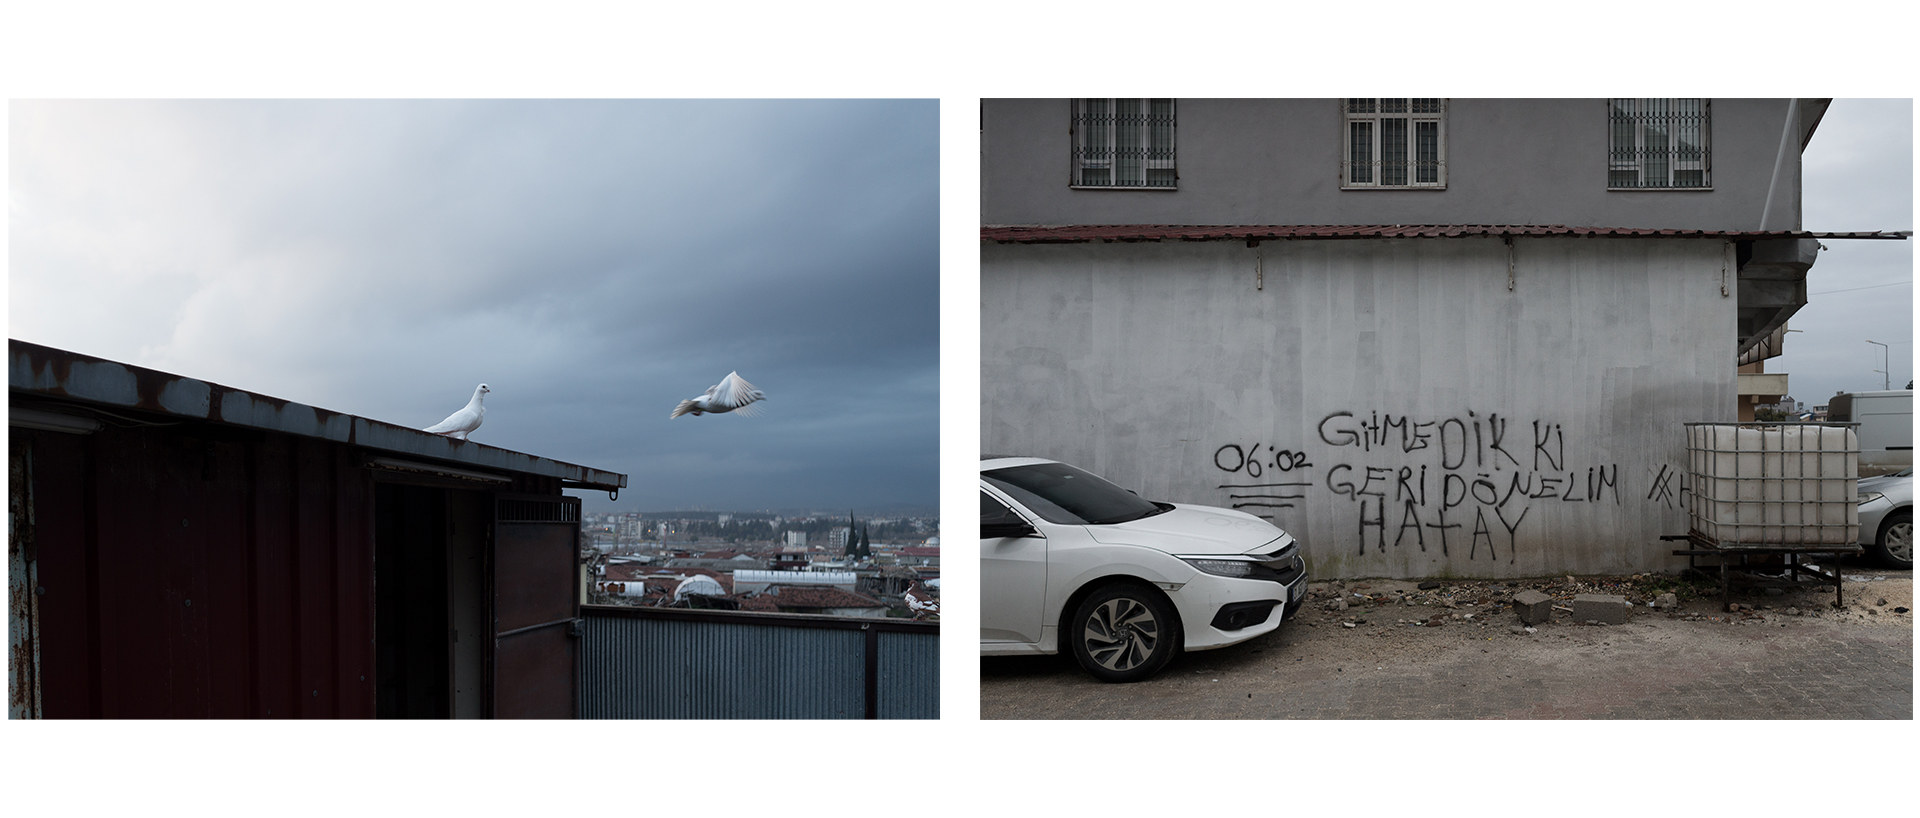 On the left, pigeons take flight off a rooftop. On the right is graffiti on a wall in Hacı Ömer Alpagot neighborhood in Antakya. (Kyriakos Finas)